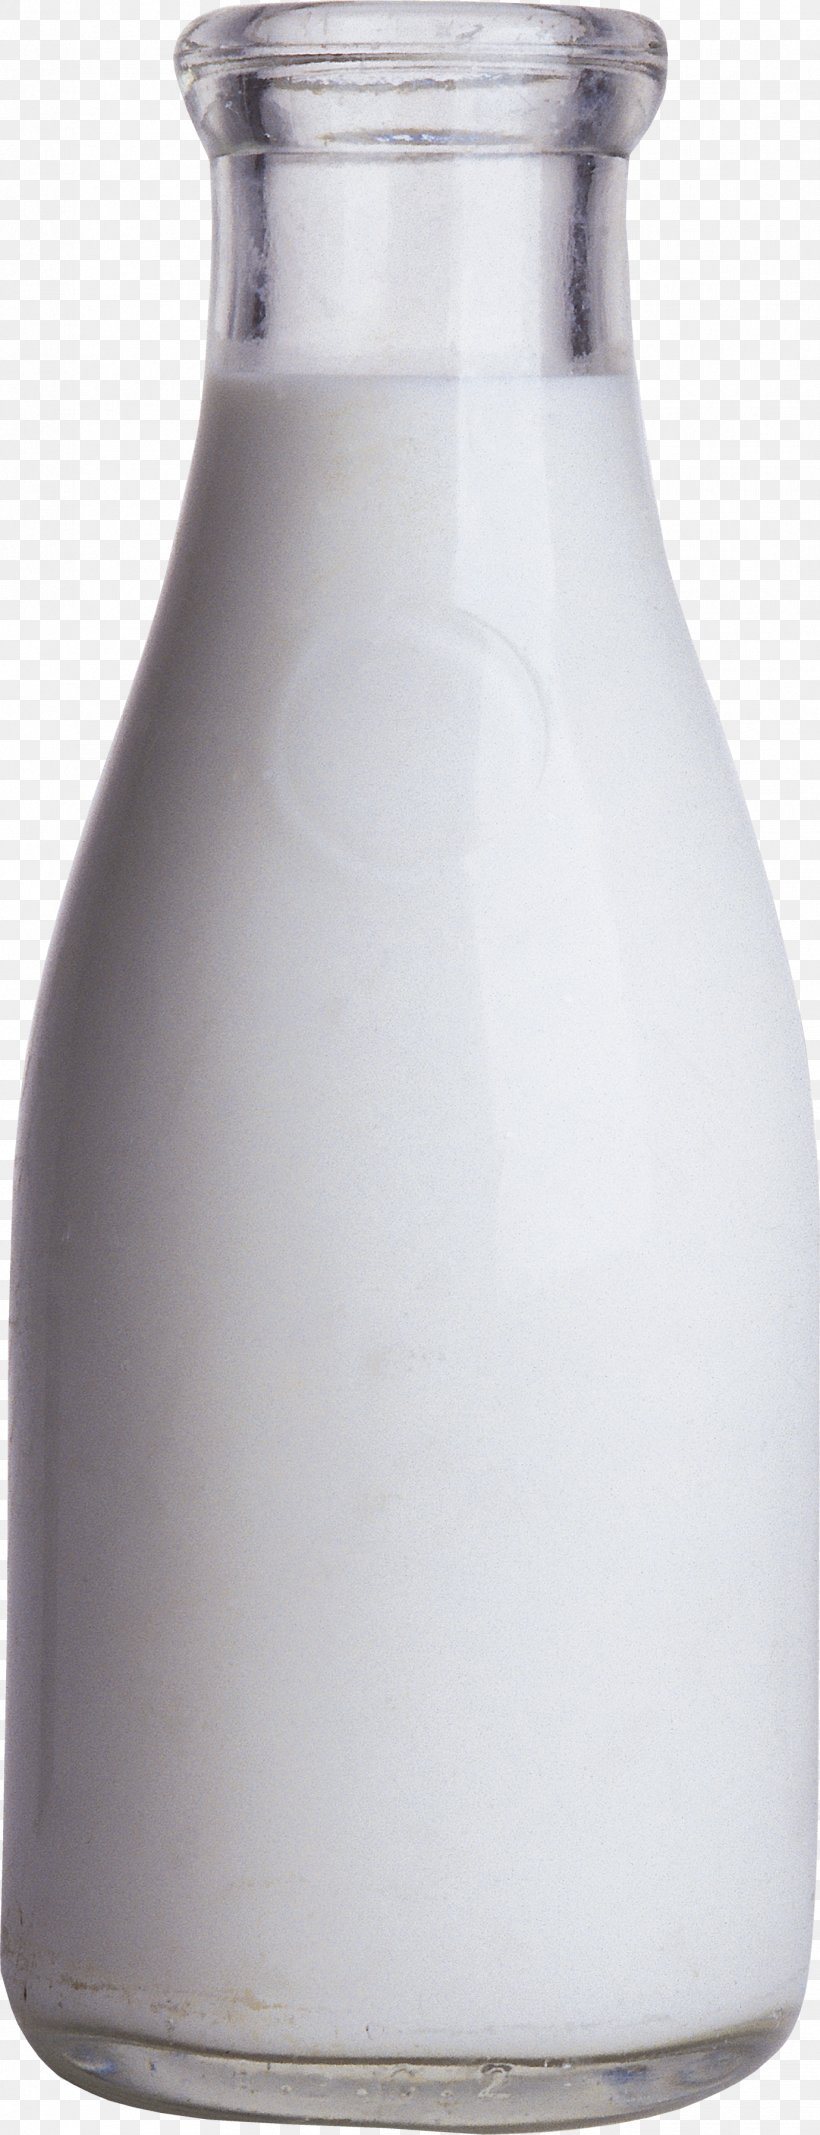 Milk Bottle Square Milk Jug, PNG, 1379x3592px, Milk, Bottle, Chocolate Milk, Glass, Glass Bottle Download Free